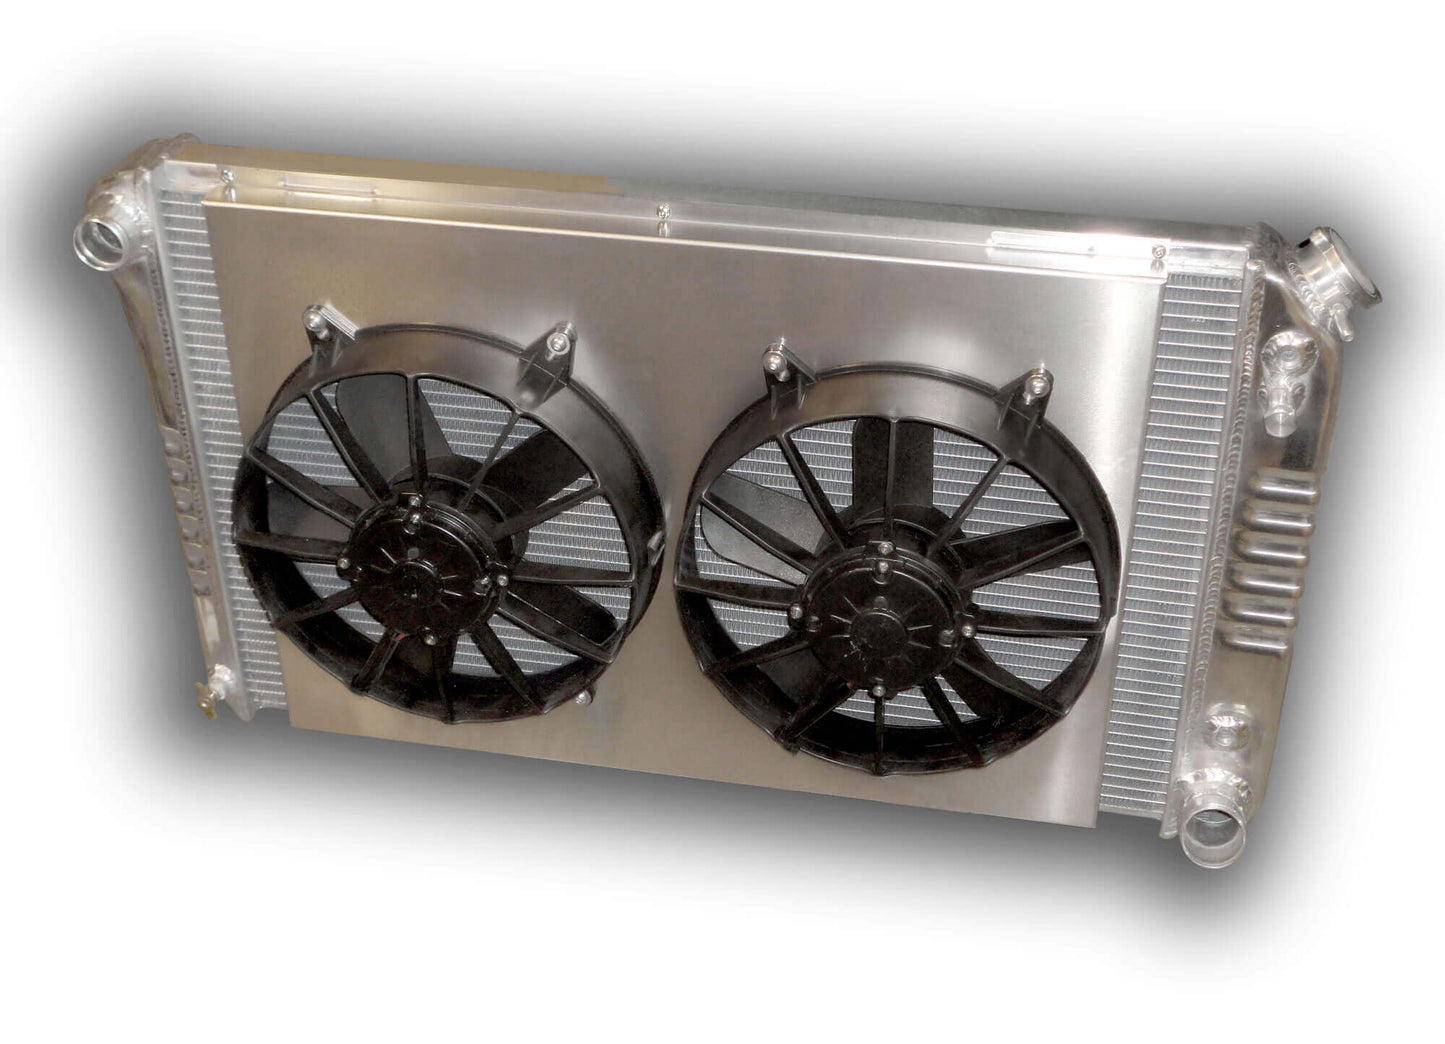 1967 - 1972 Chevy Truck Aluminum Radiator Dual Fans With Aluminum Shroud